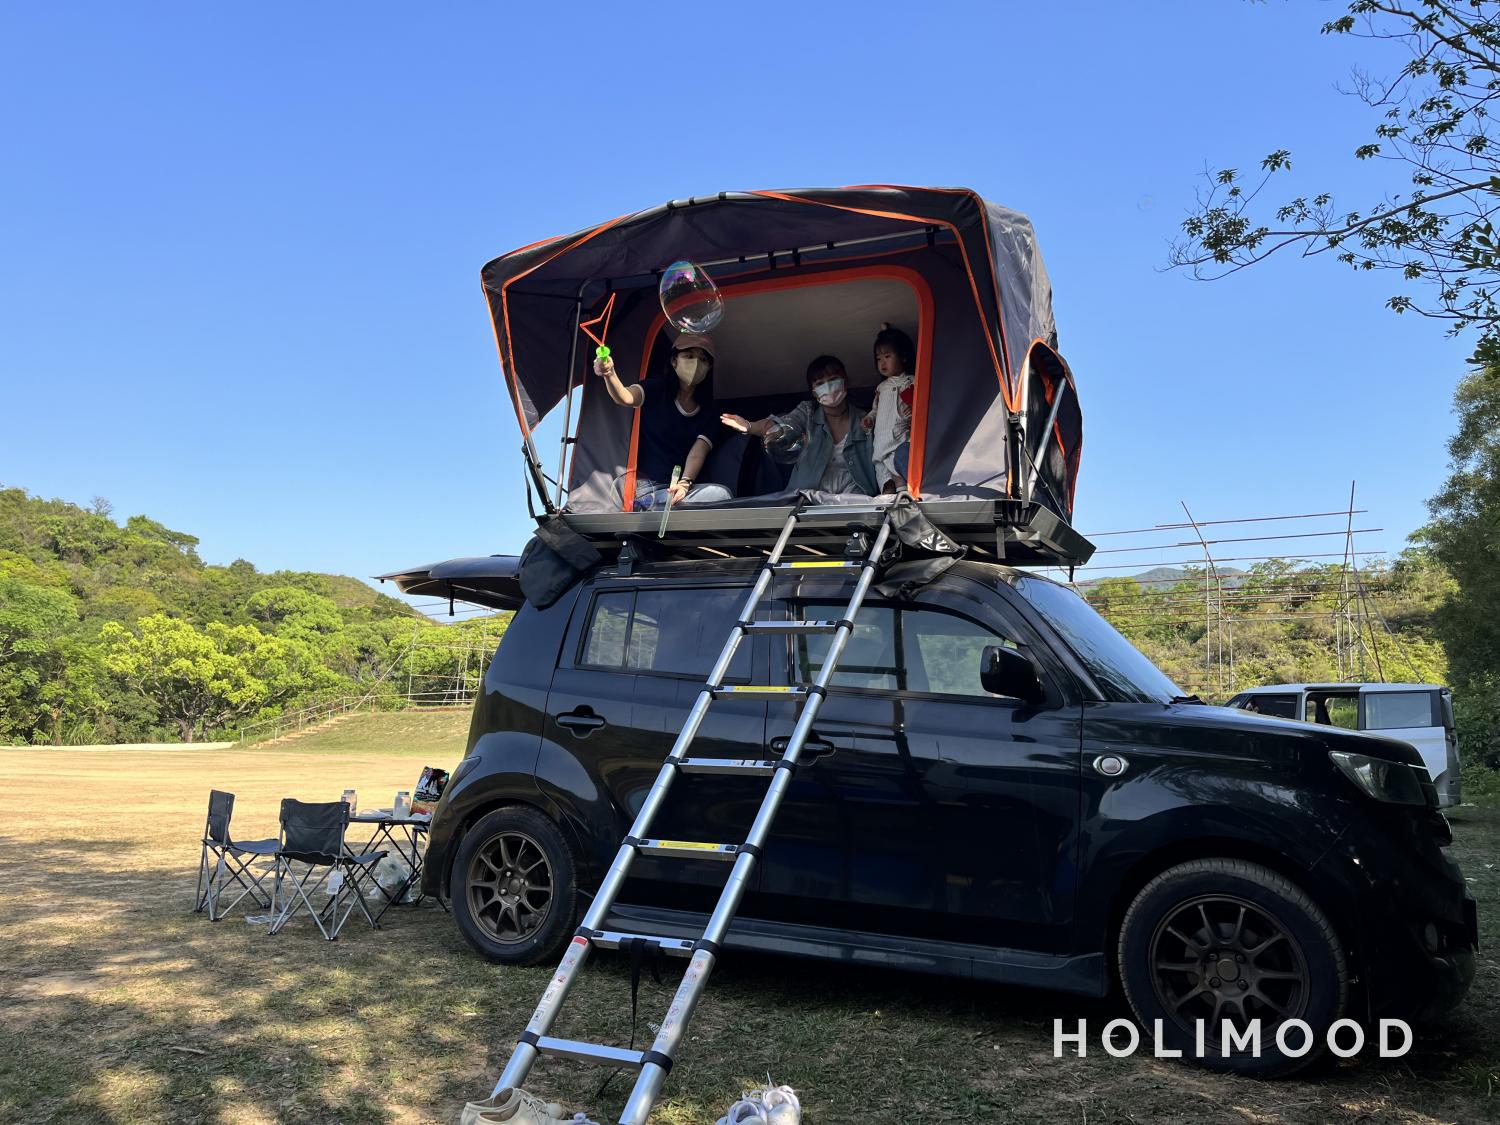 Top Tent Car Camping 【汽車露營】Toyota BB 車頂營體驗 (可攜帶寵物/租借營具) 8